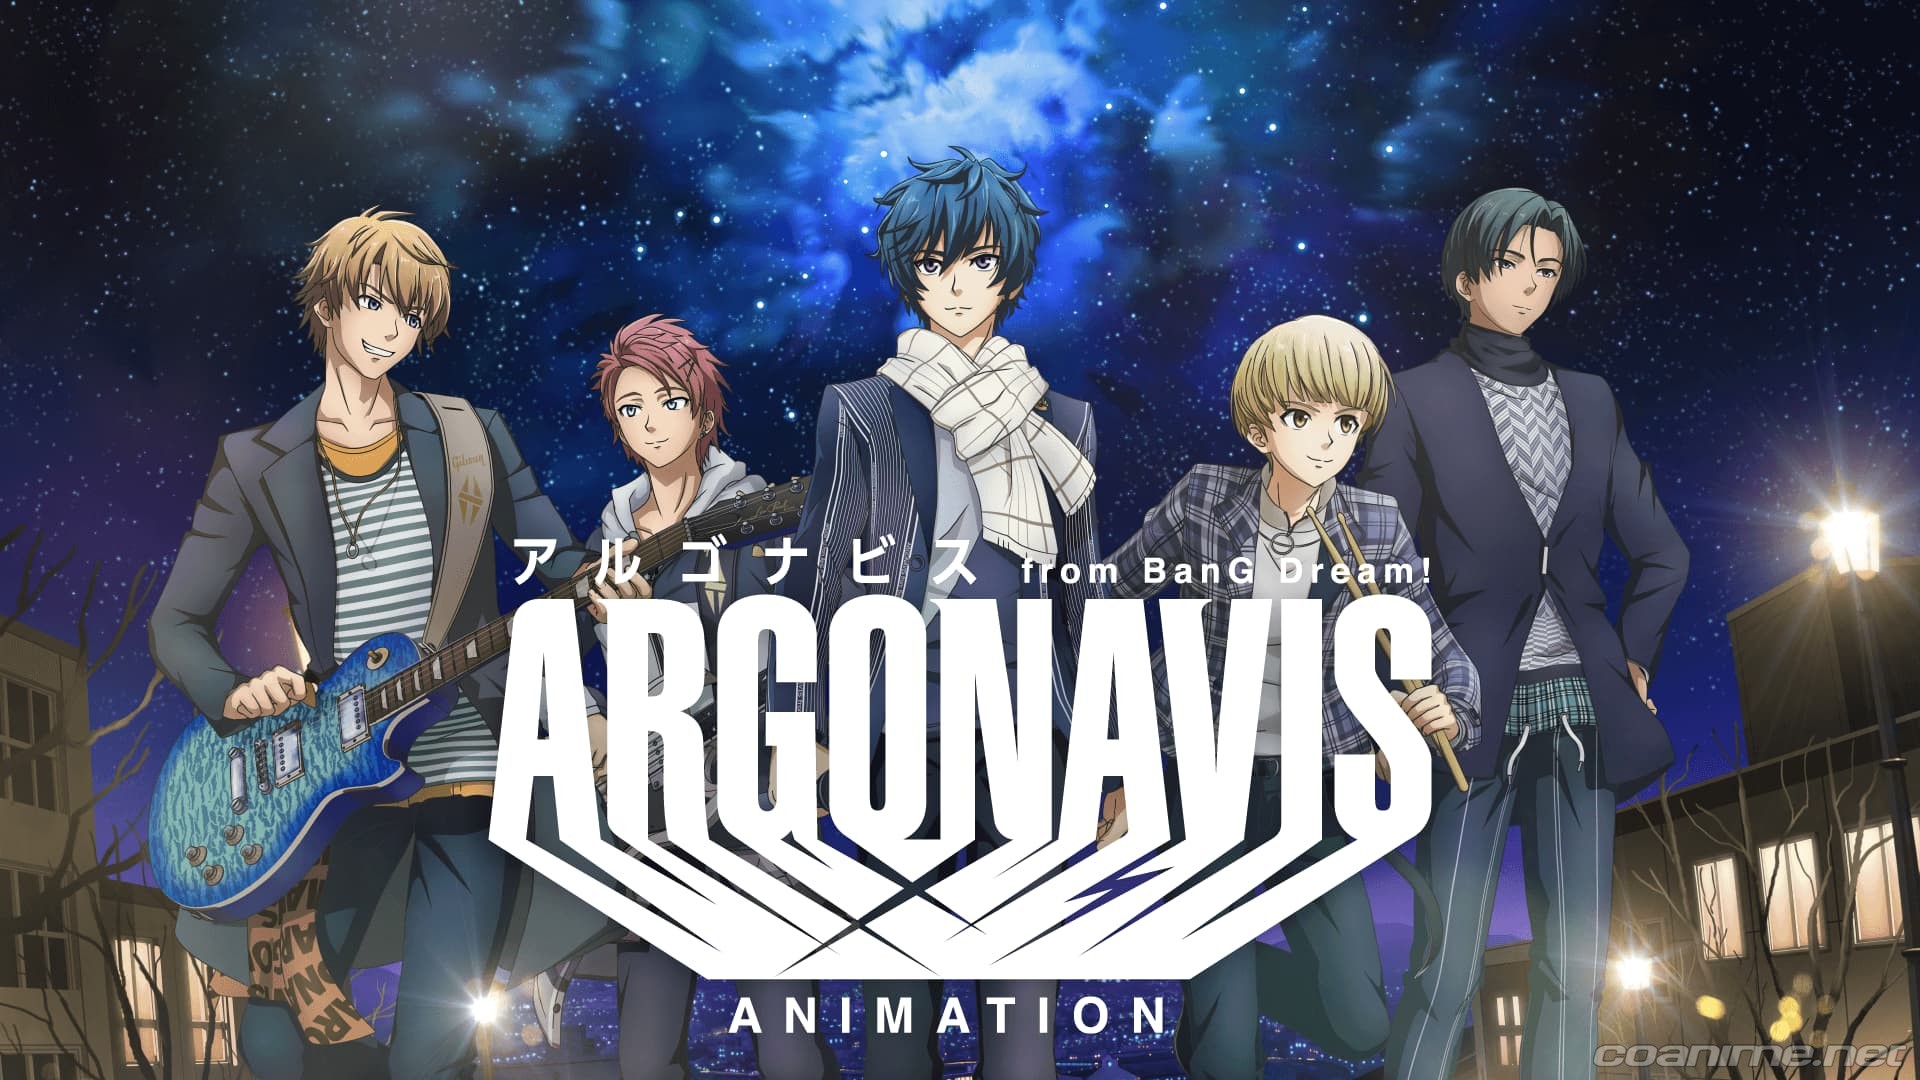 Argonavis recibe luz verde para su version Anime - Coanime.net